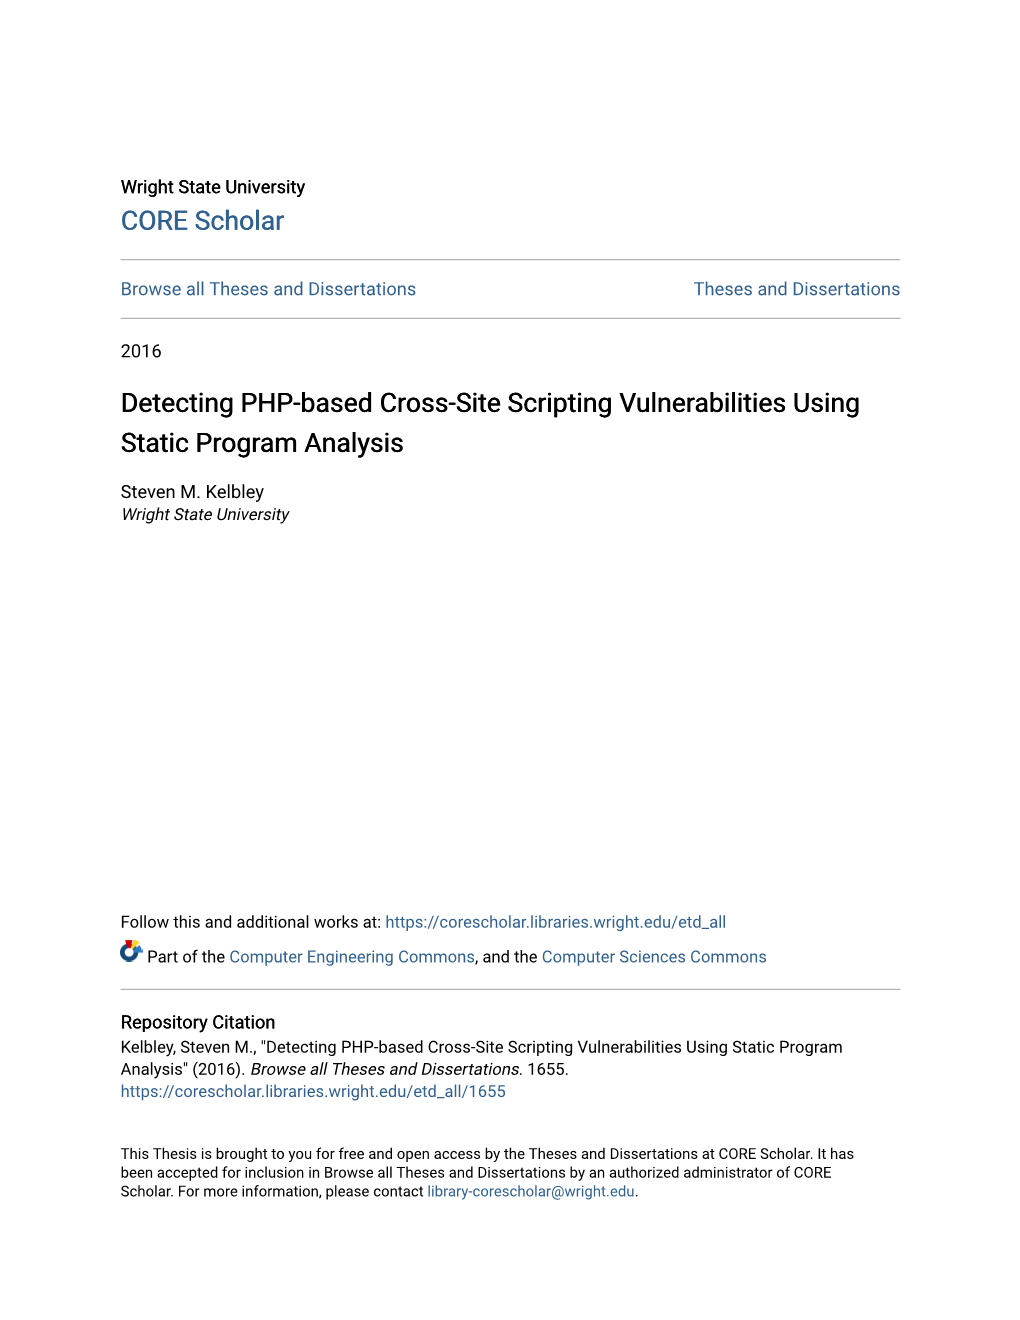 Detecting PHP-Based Cross-Site Scripting Vulnerabilities Using Static Program Analysis